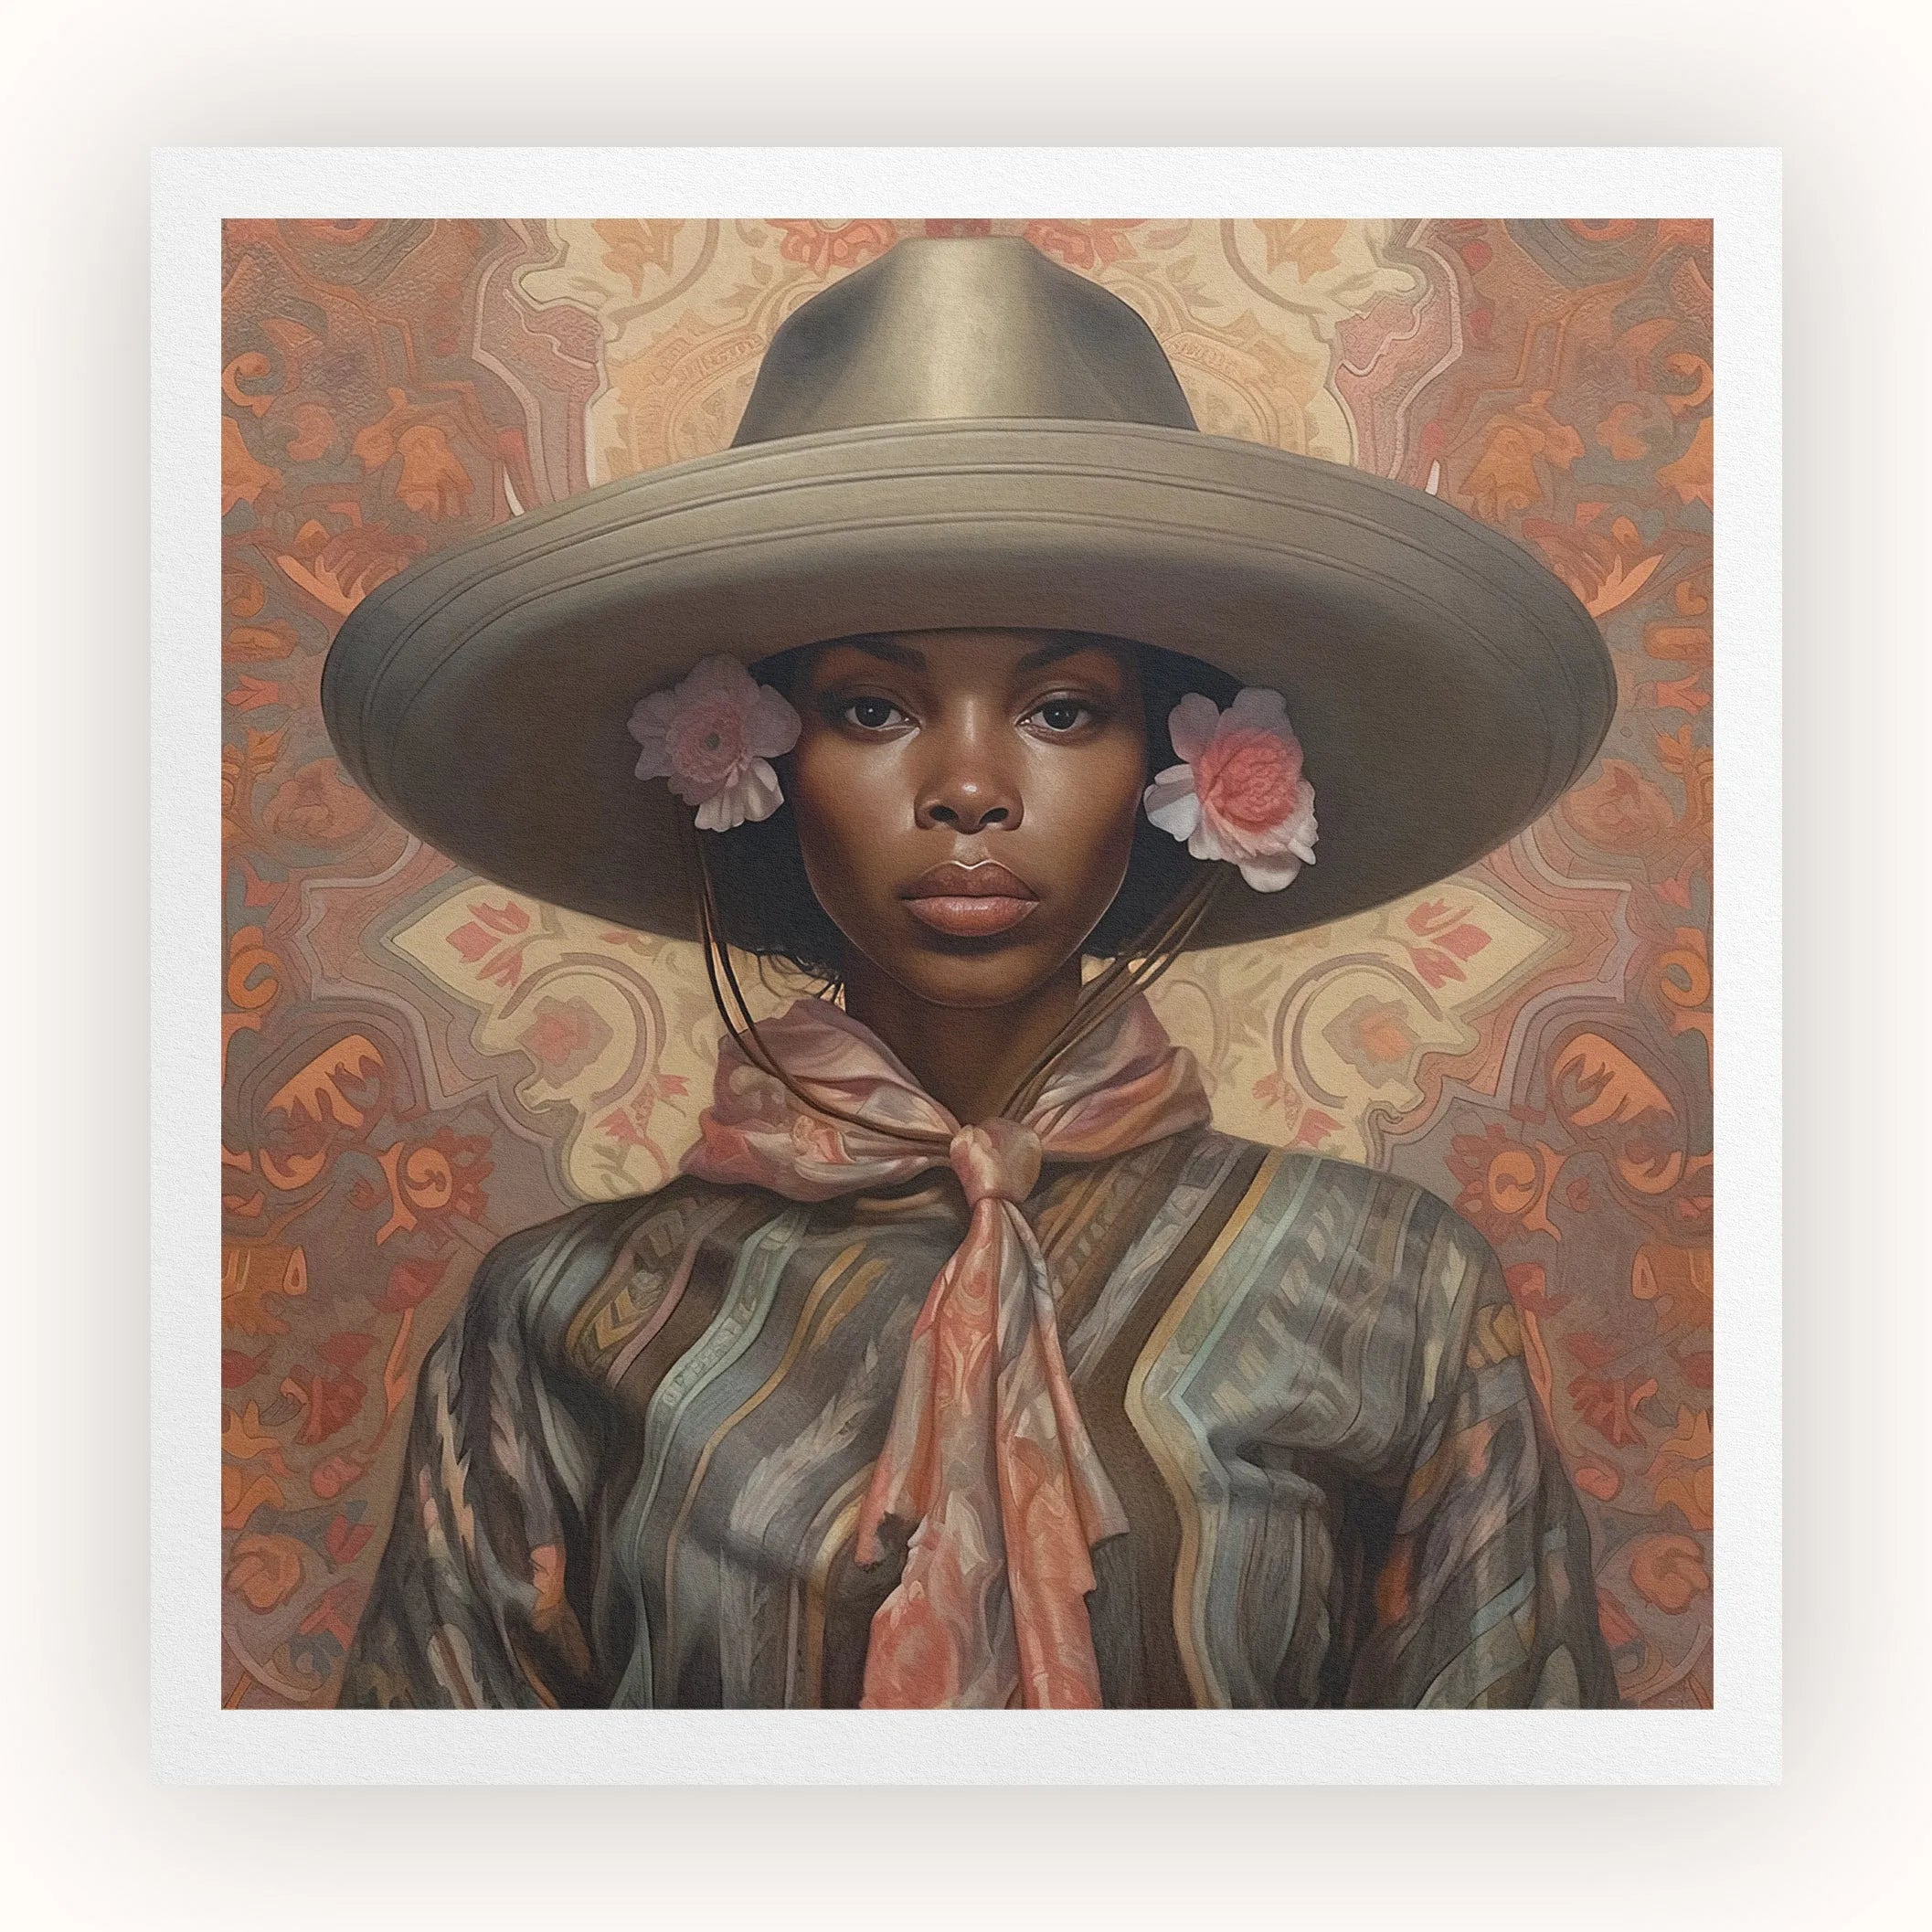 Sadie - Lesbian Black Cowgirl Art Print - Wlw Sapphic Femme - Posters Prints & Visual Artwork - Aesthetic Art